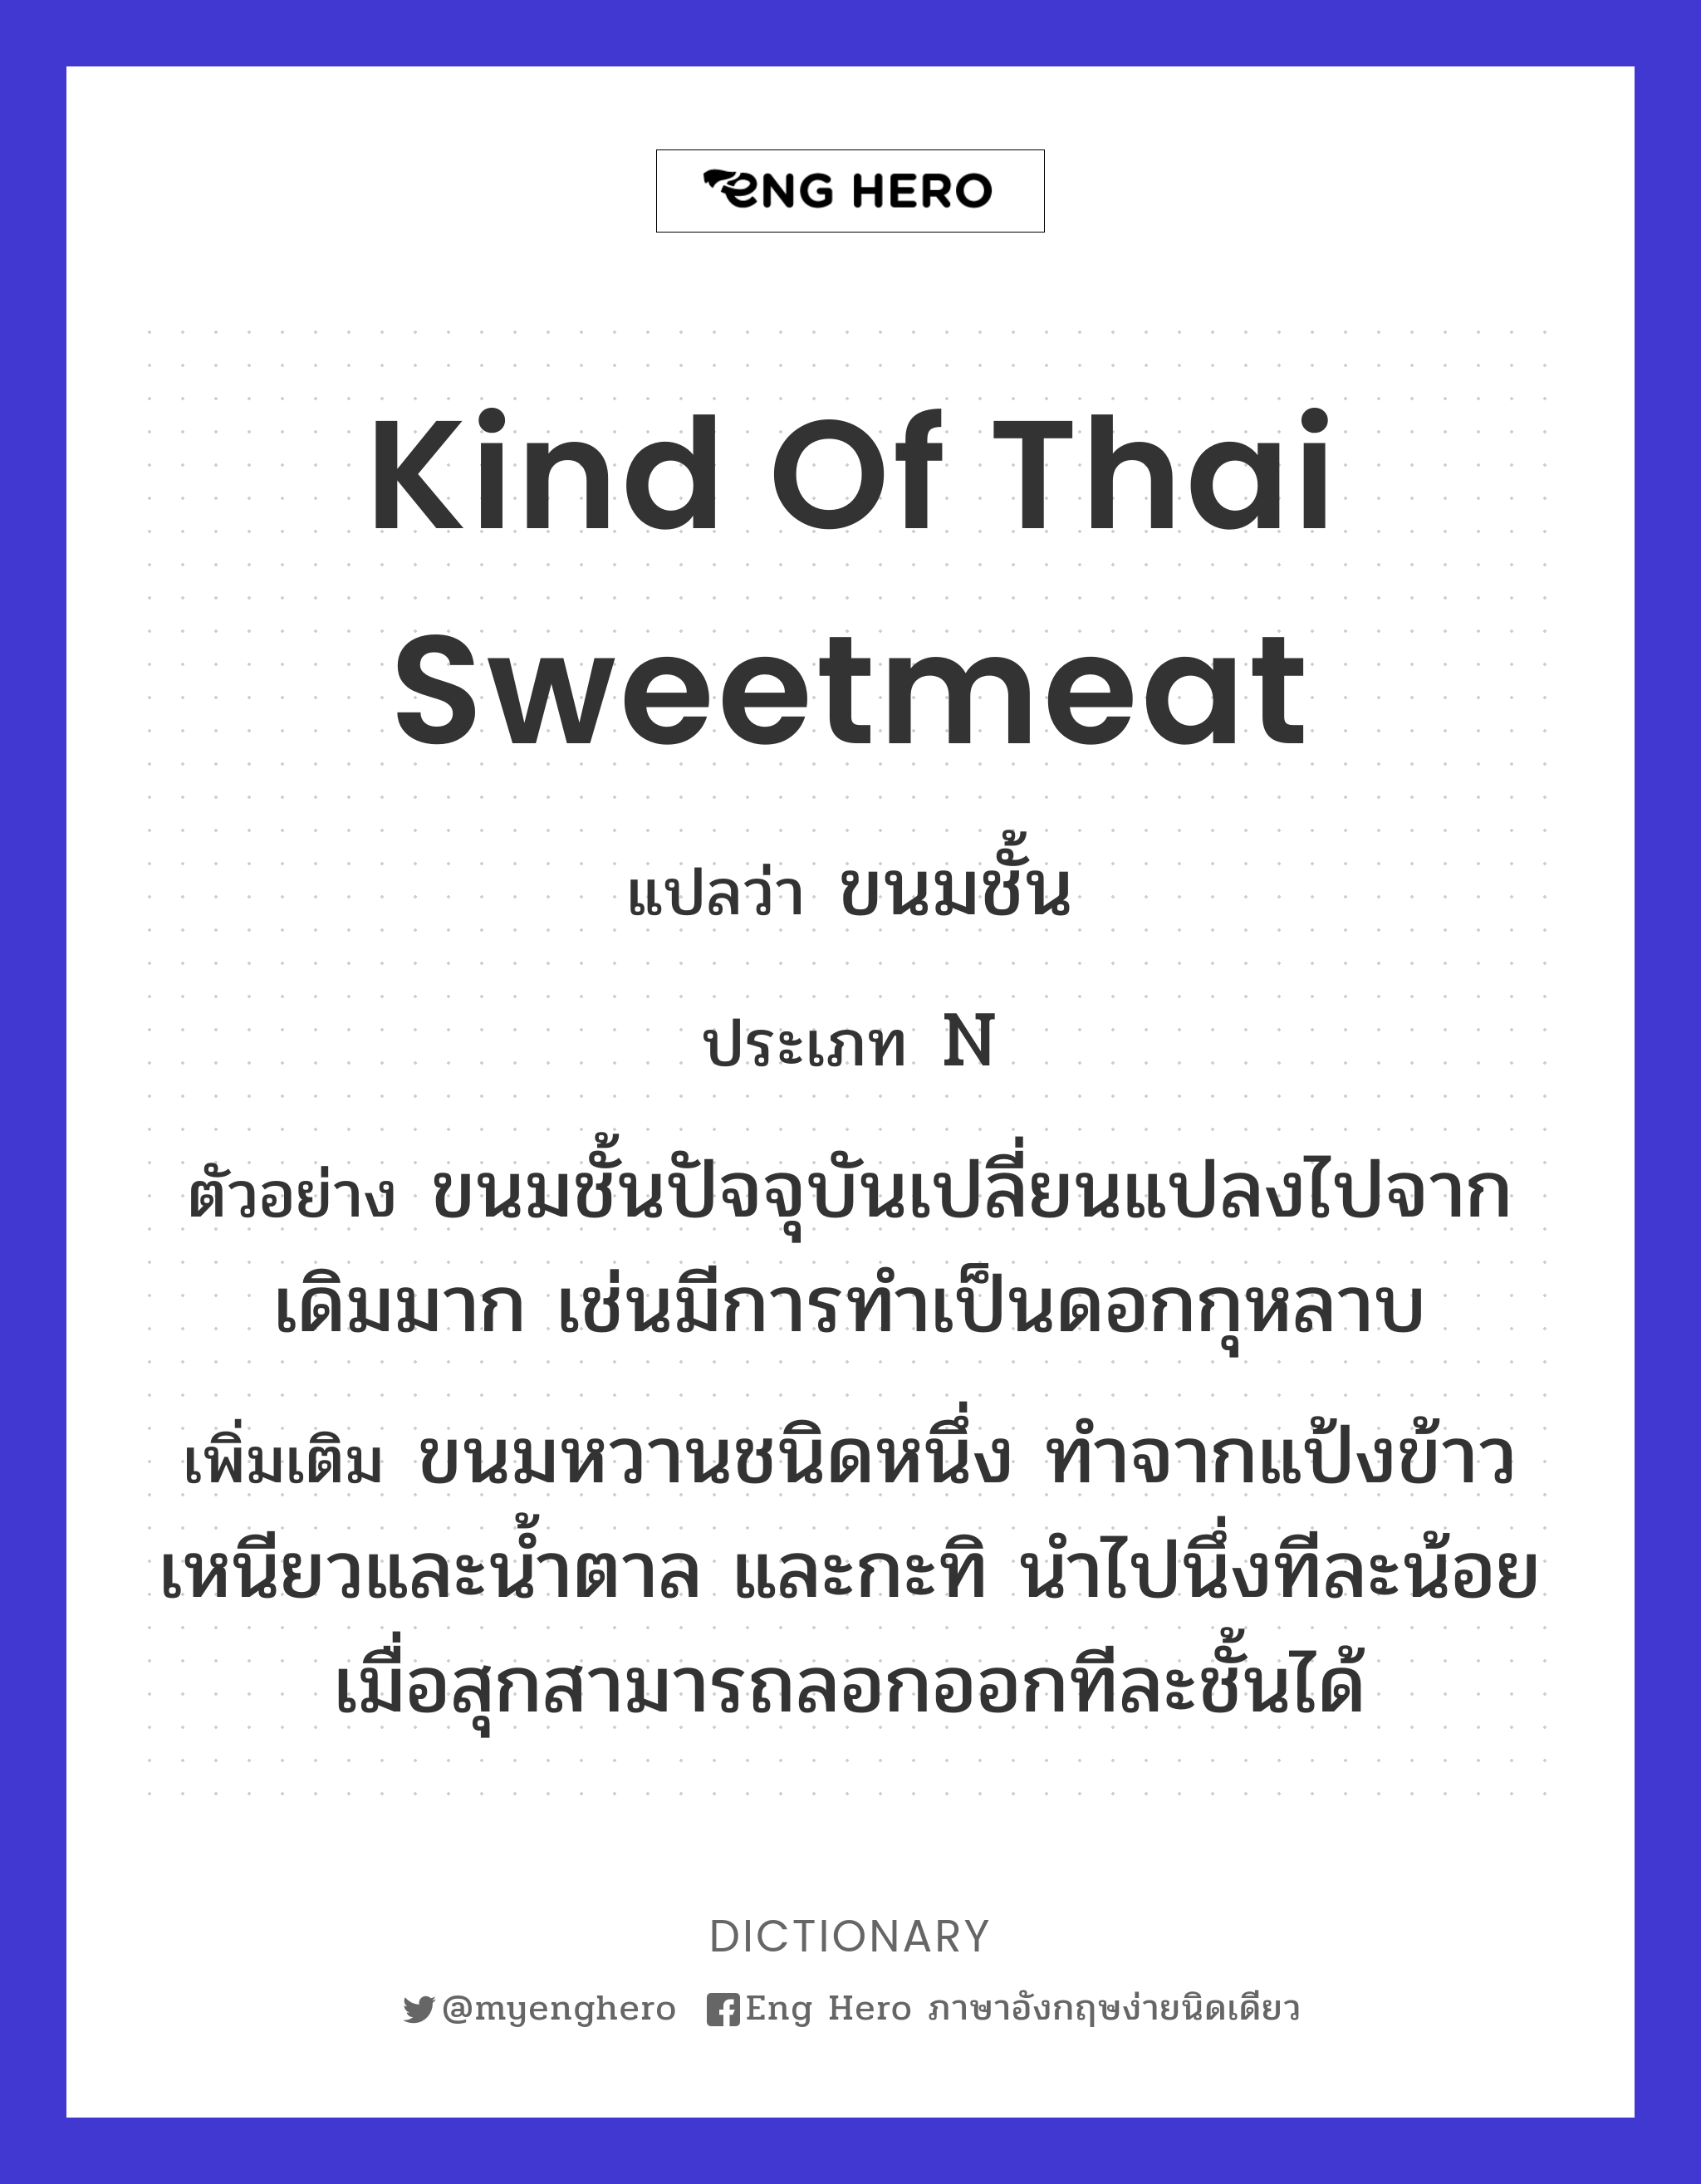 kind of Thai sweetmeat